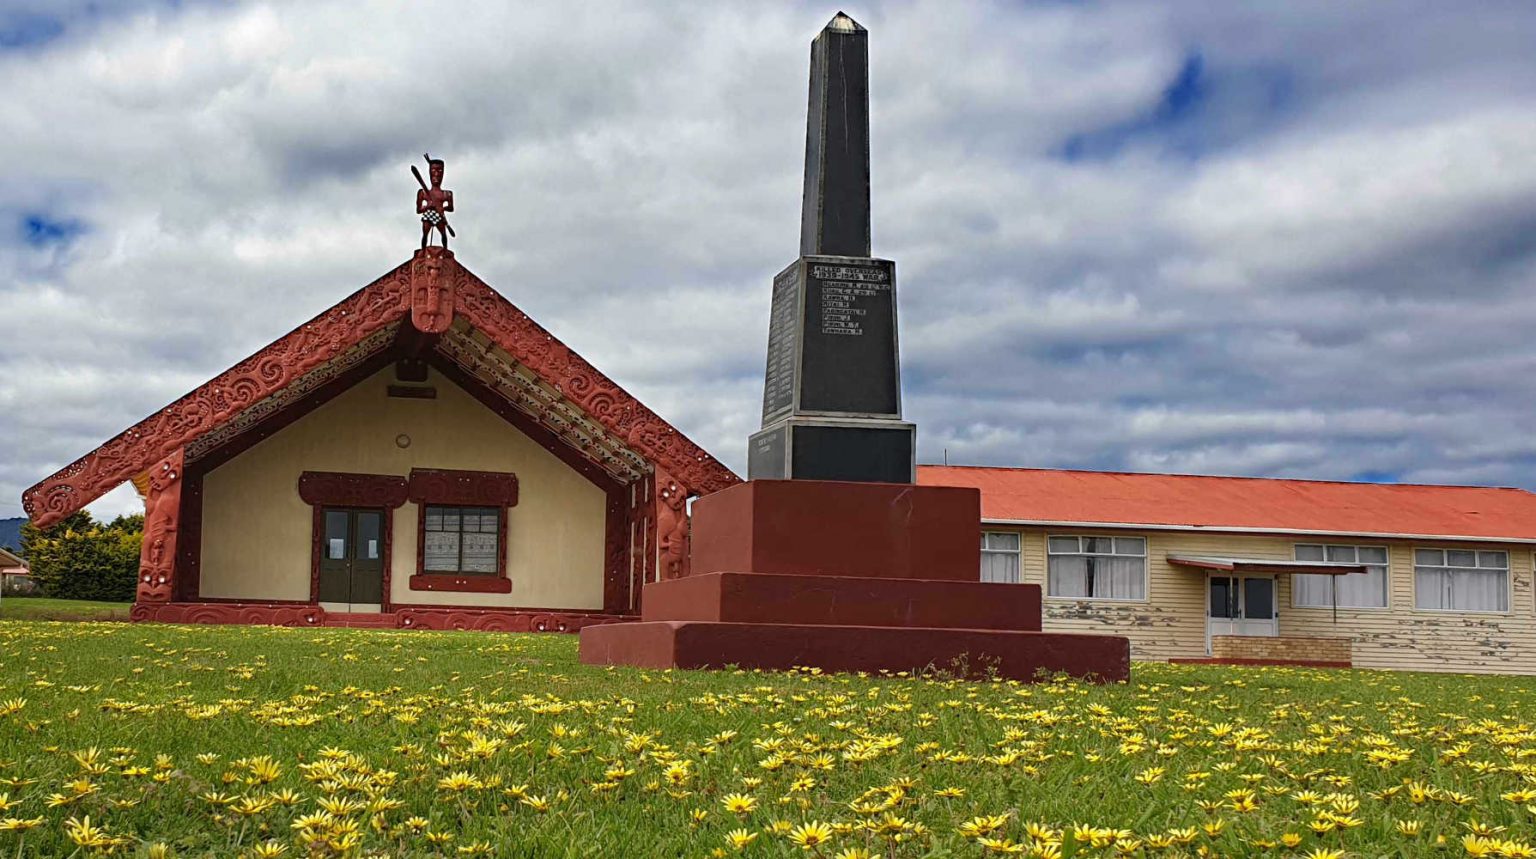 TE KAHA vicnity Marae with its military memorial, New Zealand